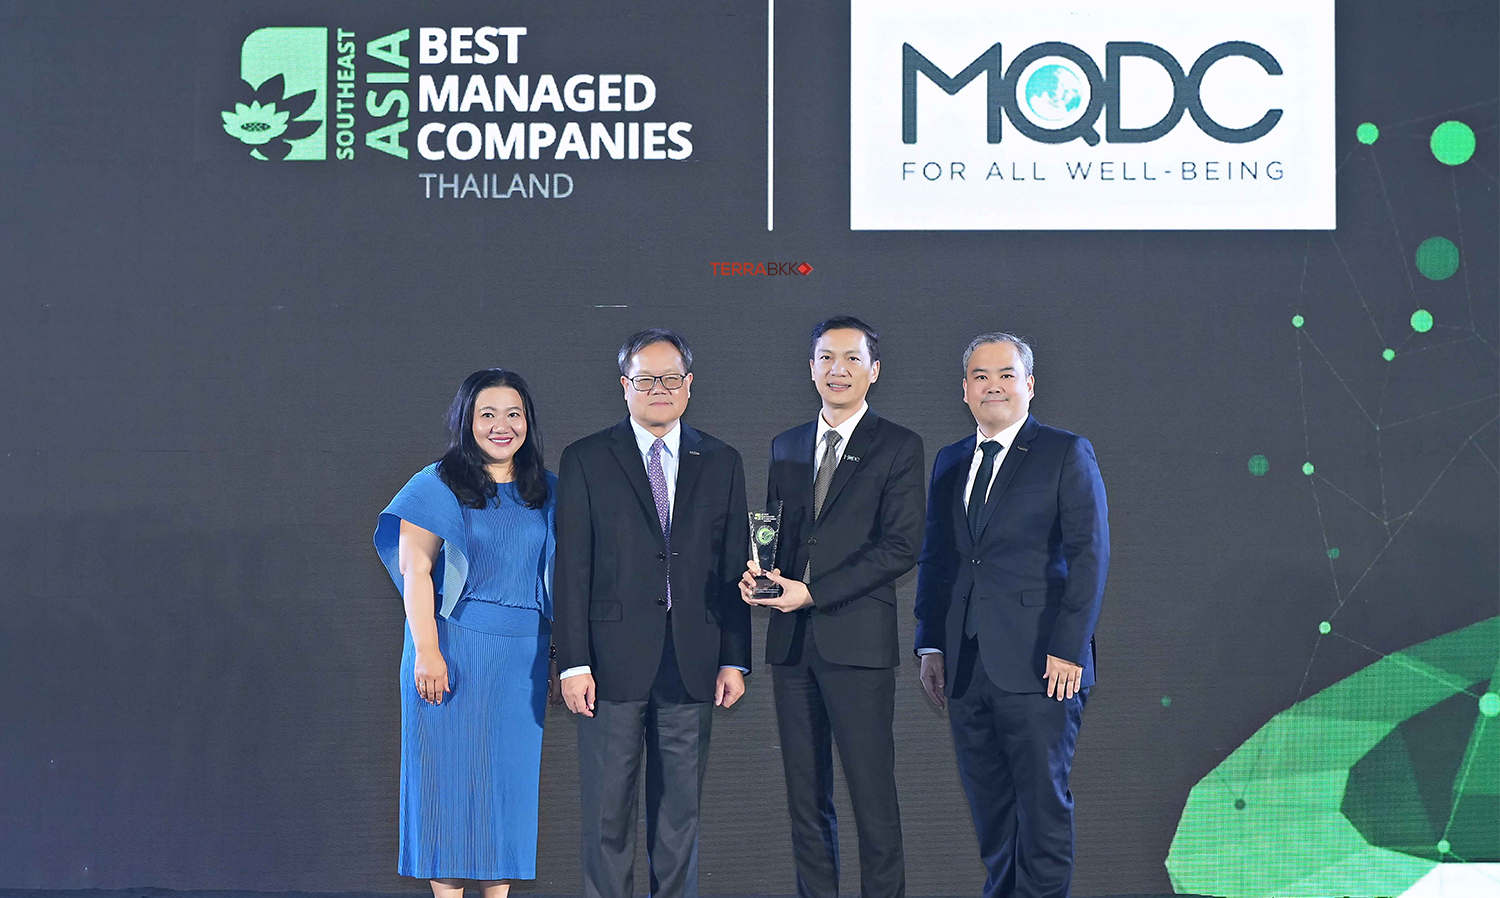 mqdc-ชนะรางวัล-“thailand’s-best-managed-companies”-ประจำปี-256